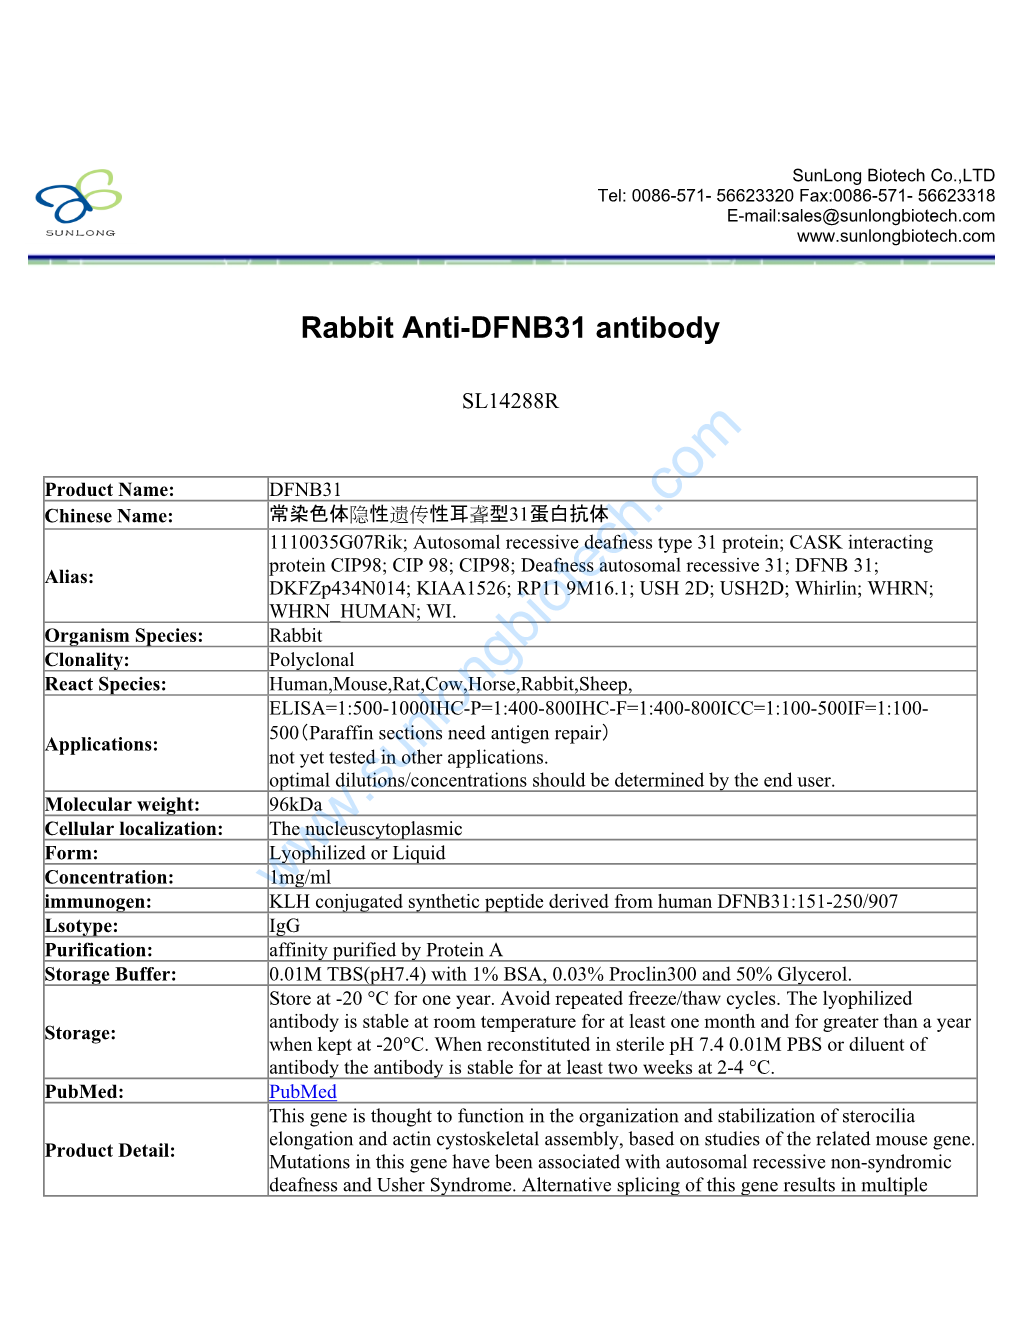 Rabbit Anti-DFNB31 Antibody-SL14288R